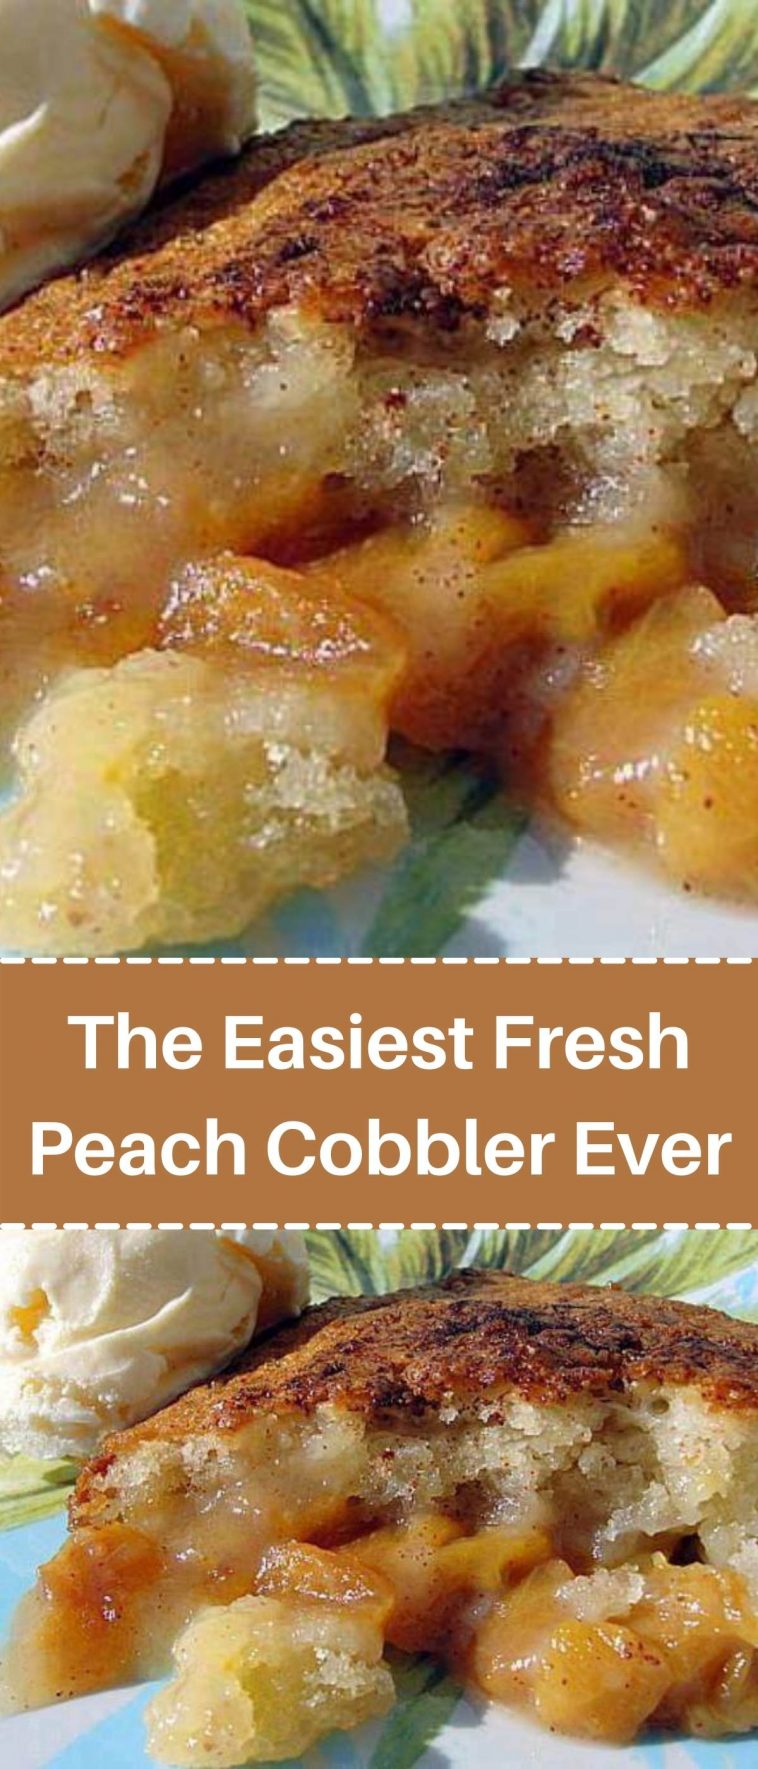 The Easiest Fresh Peach Cobbler Ever